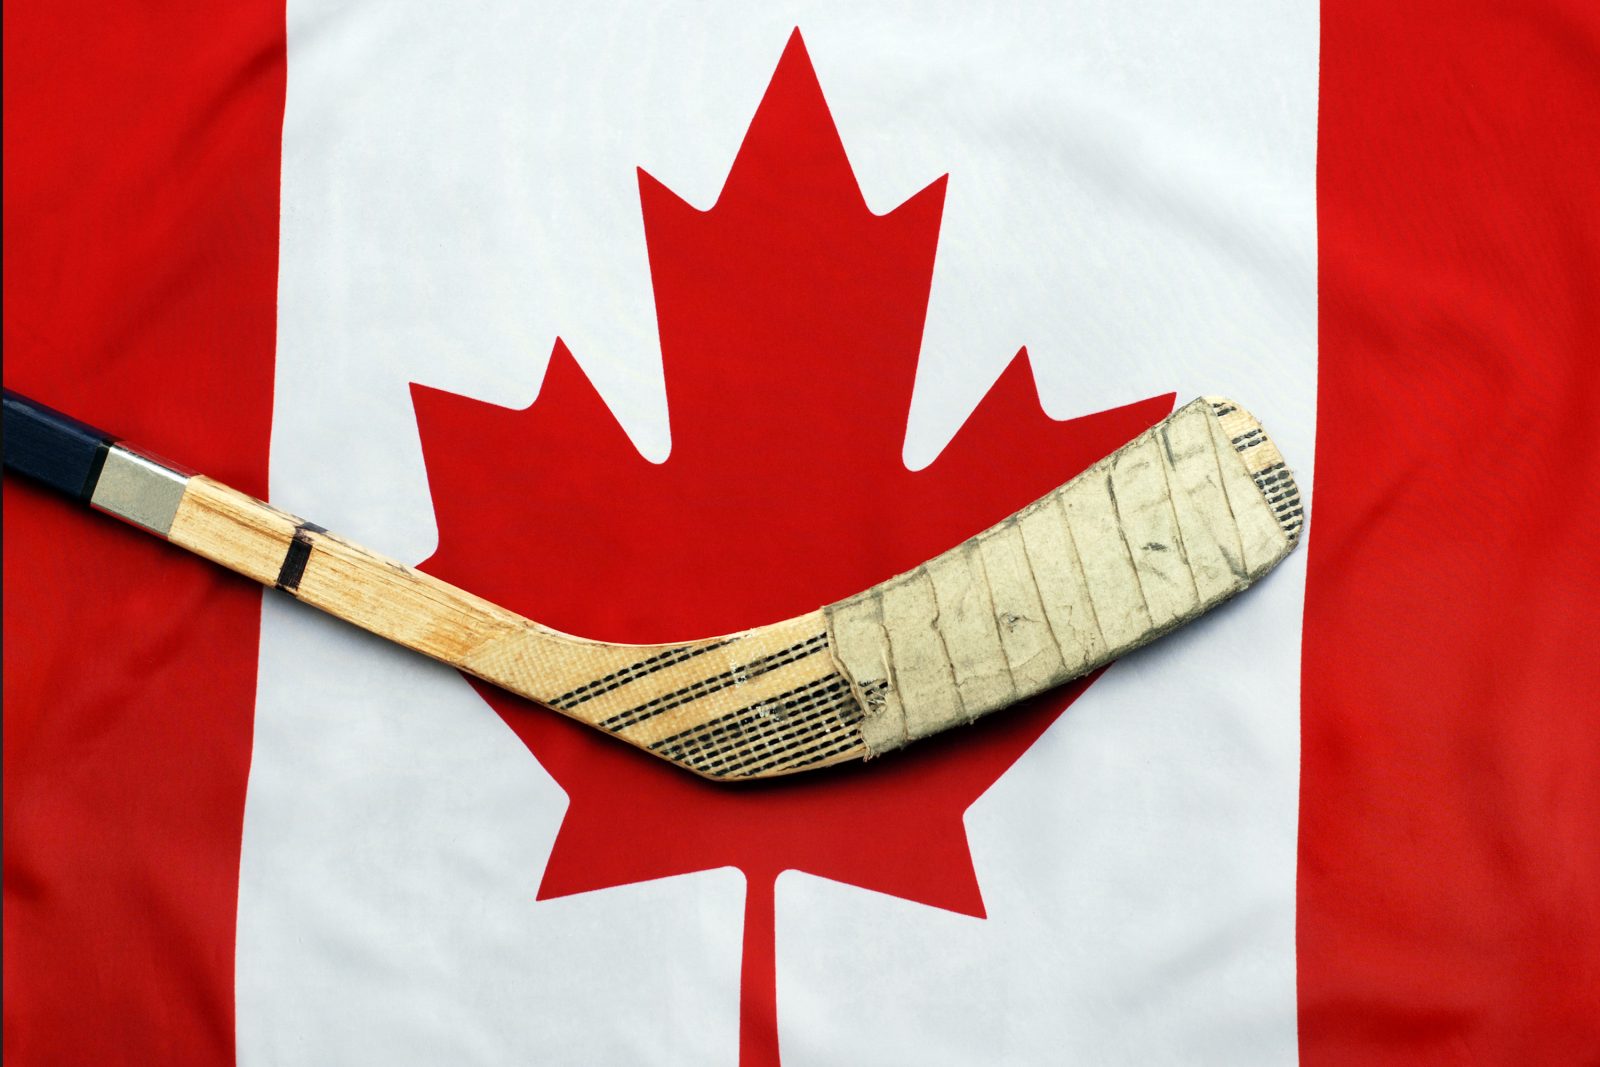 A hockey stick lays across a Canadian flag.